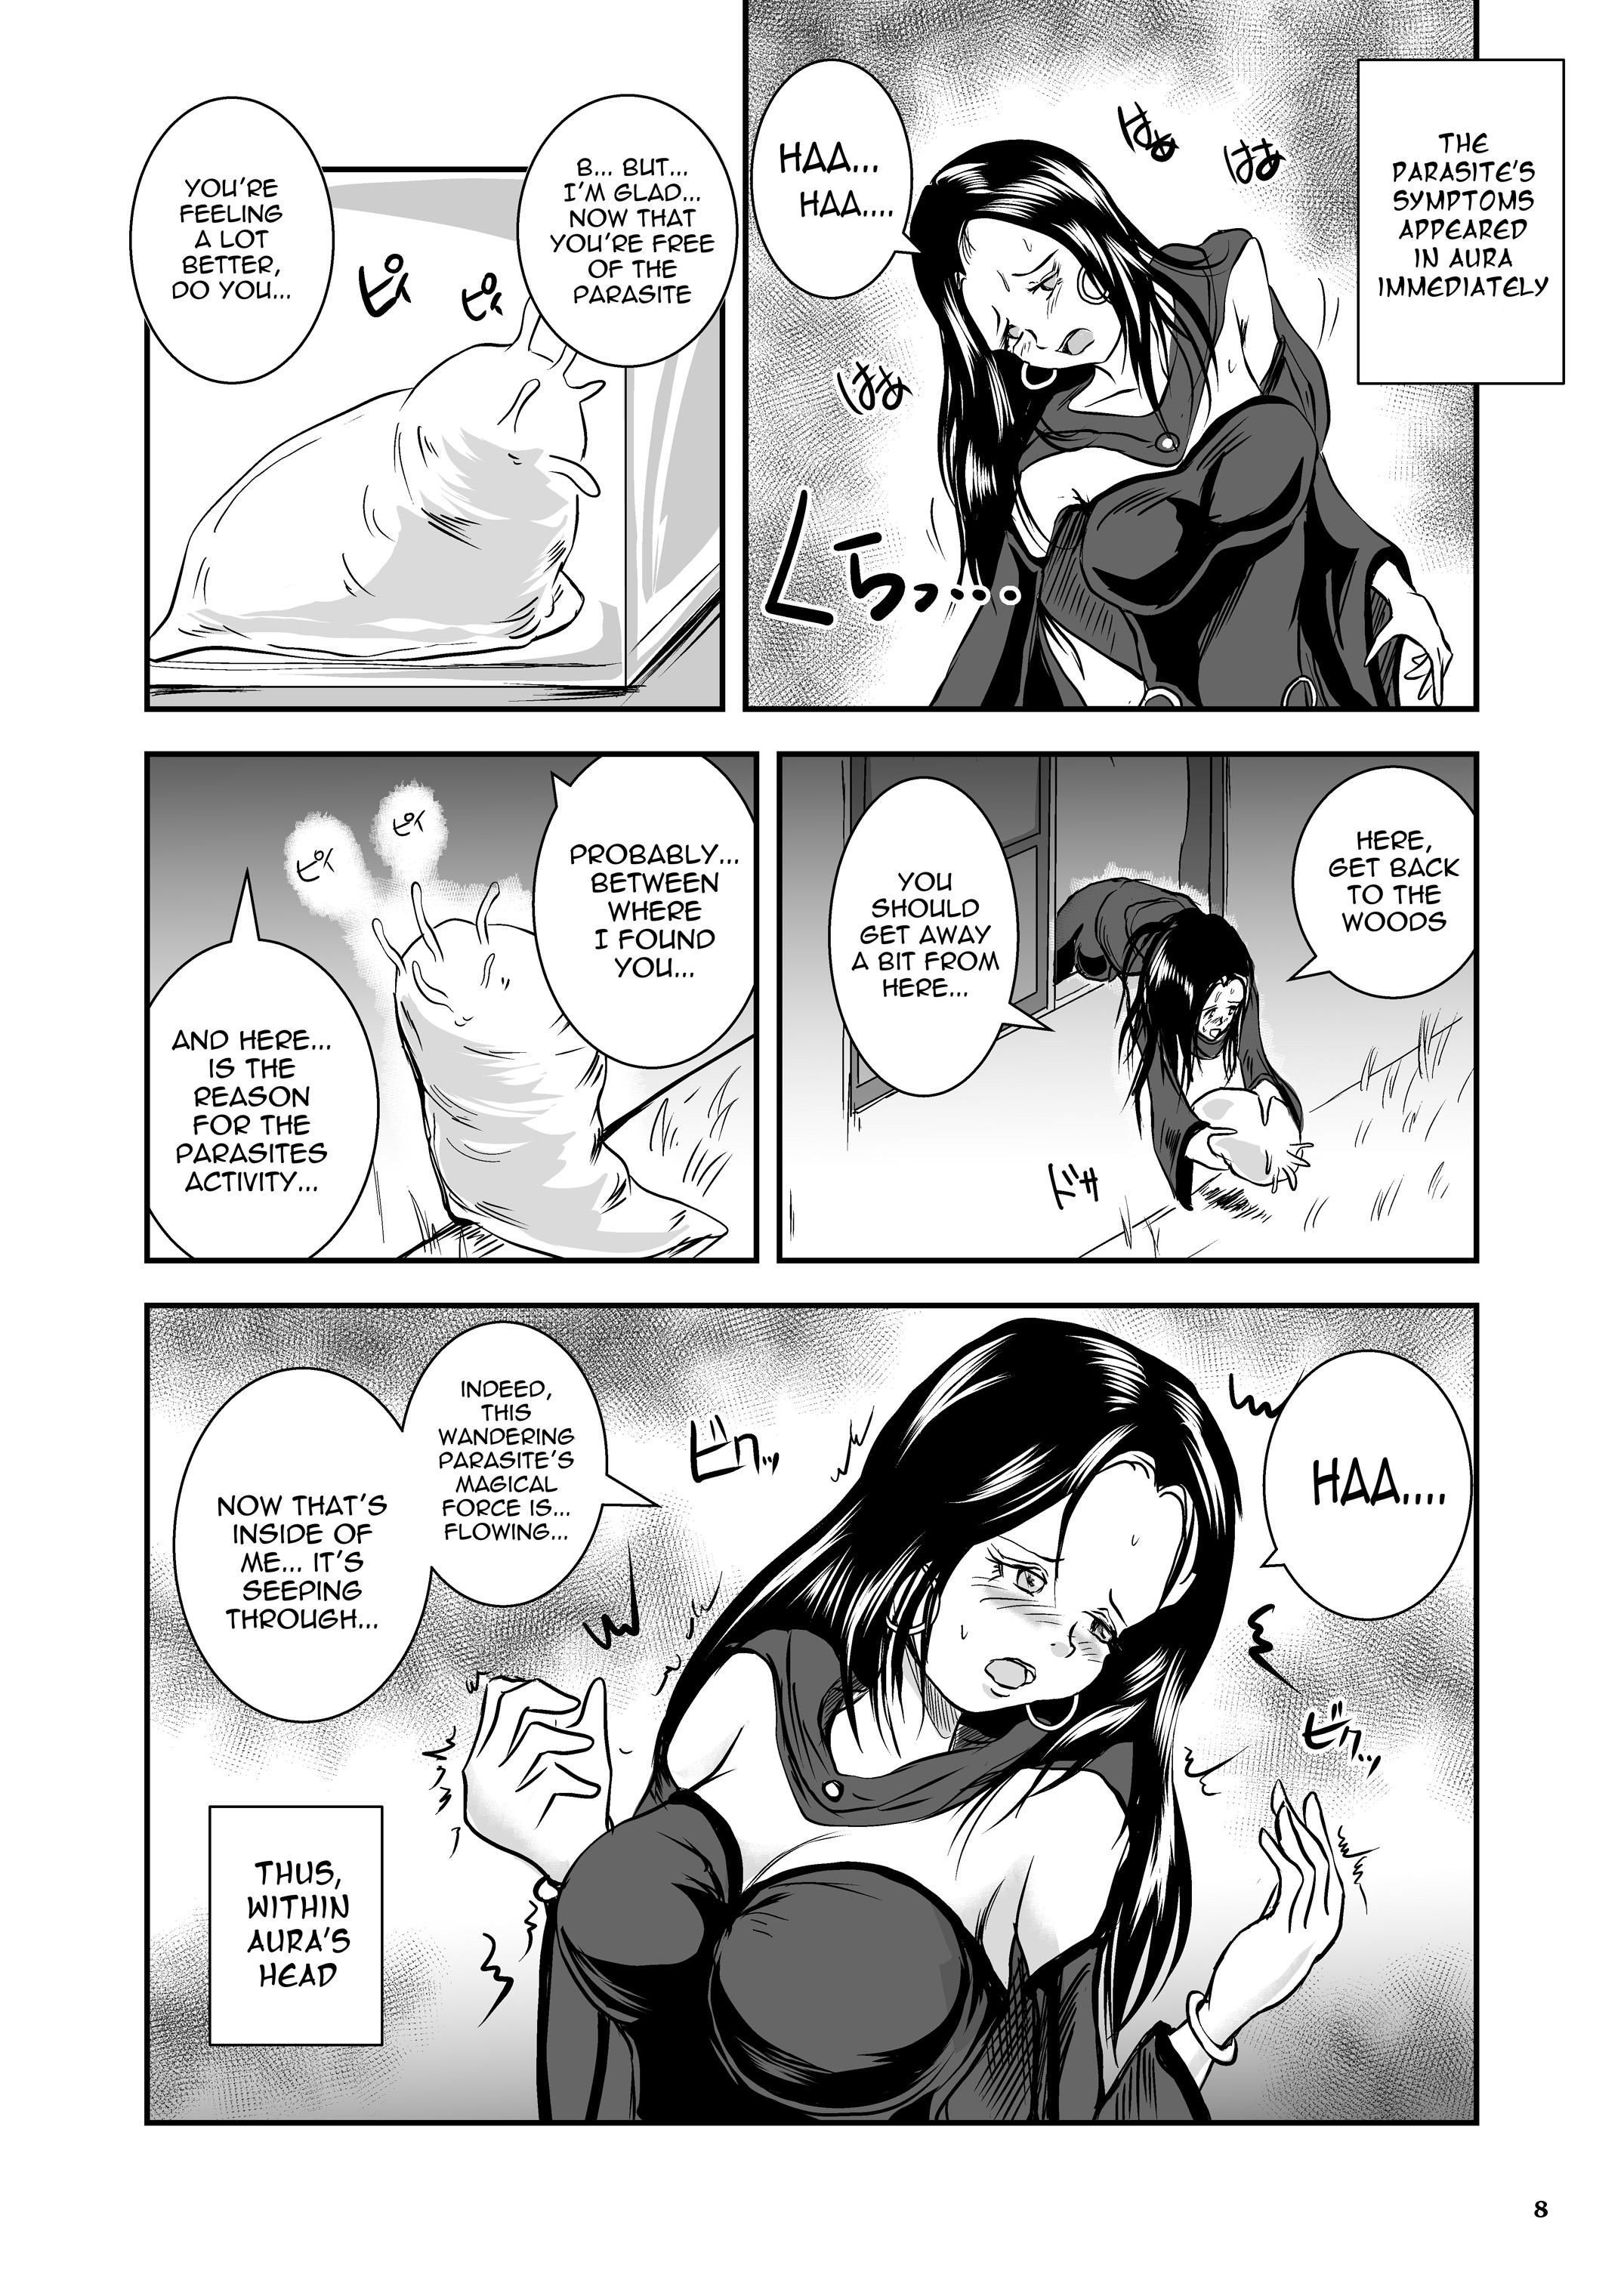 Awesome Oonamekuji to Kurokami no Mahoutsukai - Parasitized Giant Slugs V.S. Sorceress of the Black Hair as Aura Gay Group - Page 8